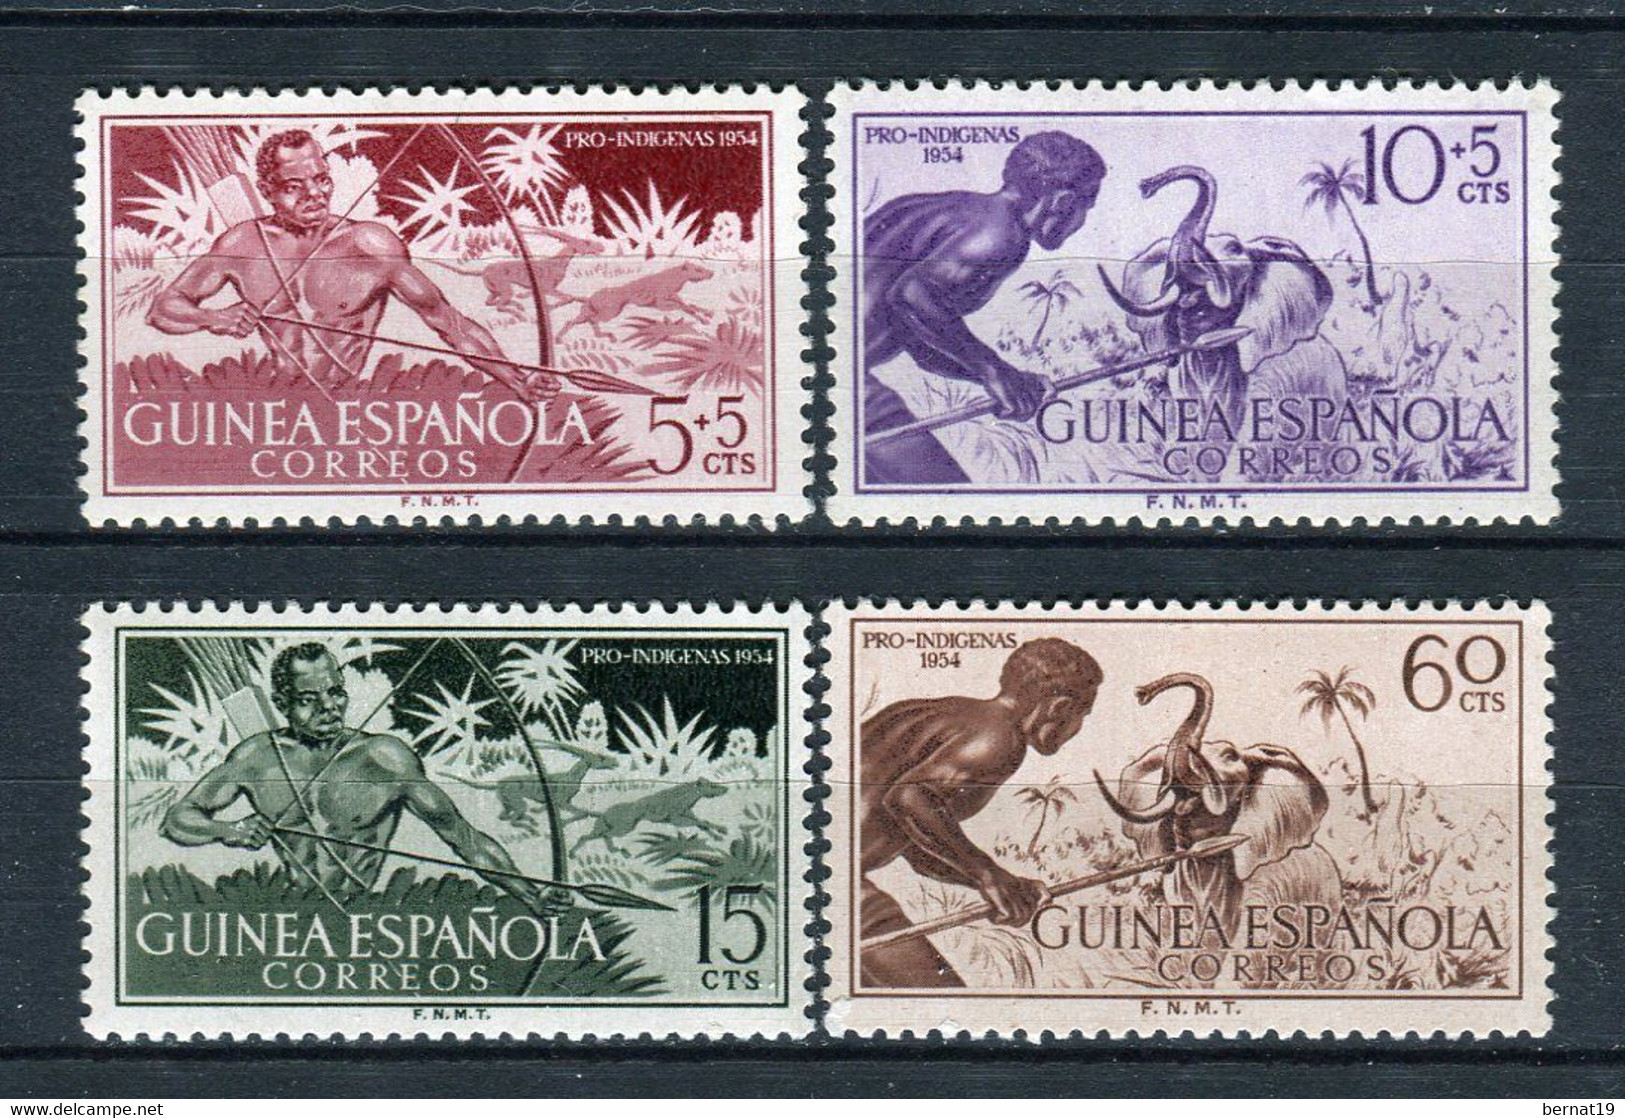 Guinea Española 1954. Edifil 334-37 X 2 ** MNH. - Guinea Española